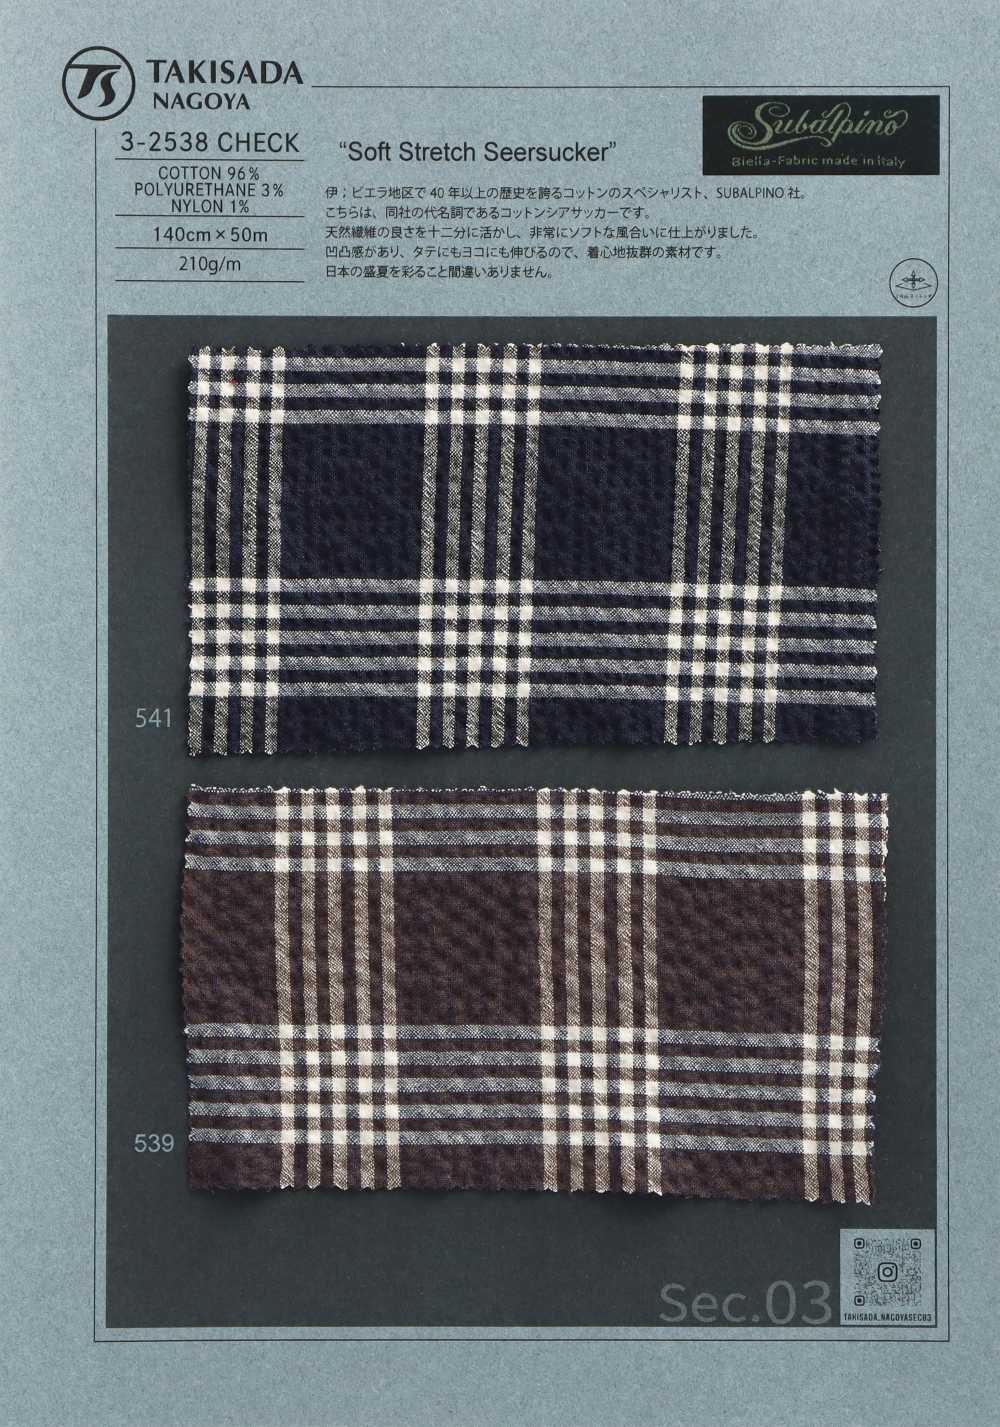 3-2538CHECK SUBALPINO Shear Seersucker Check[Têxtil / Tecido] Takisada Nagoya